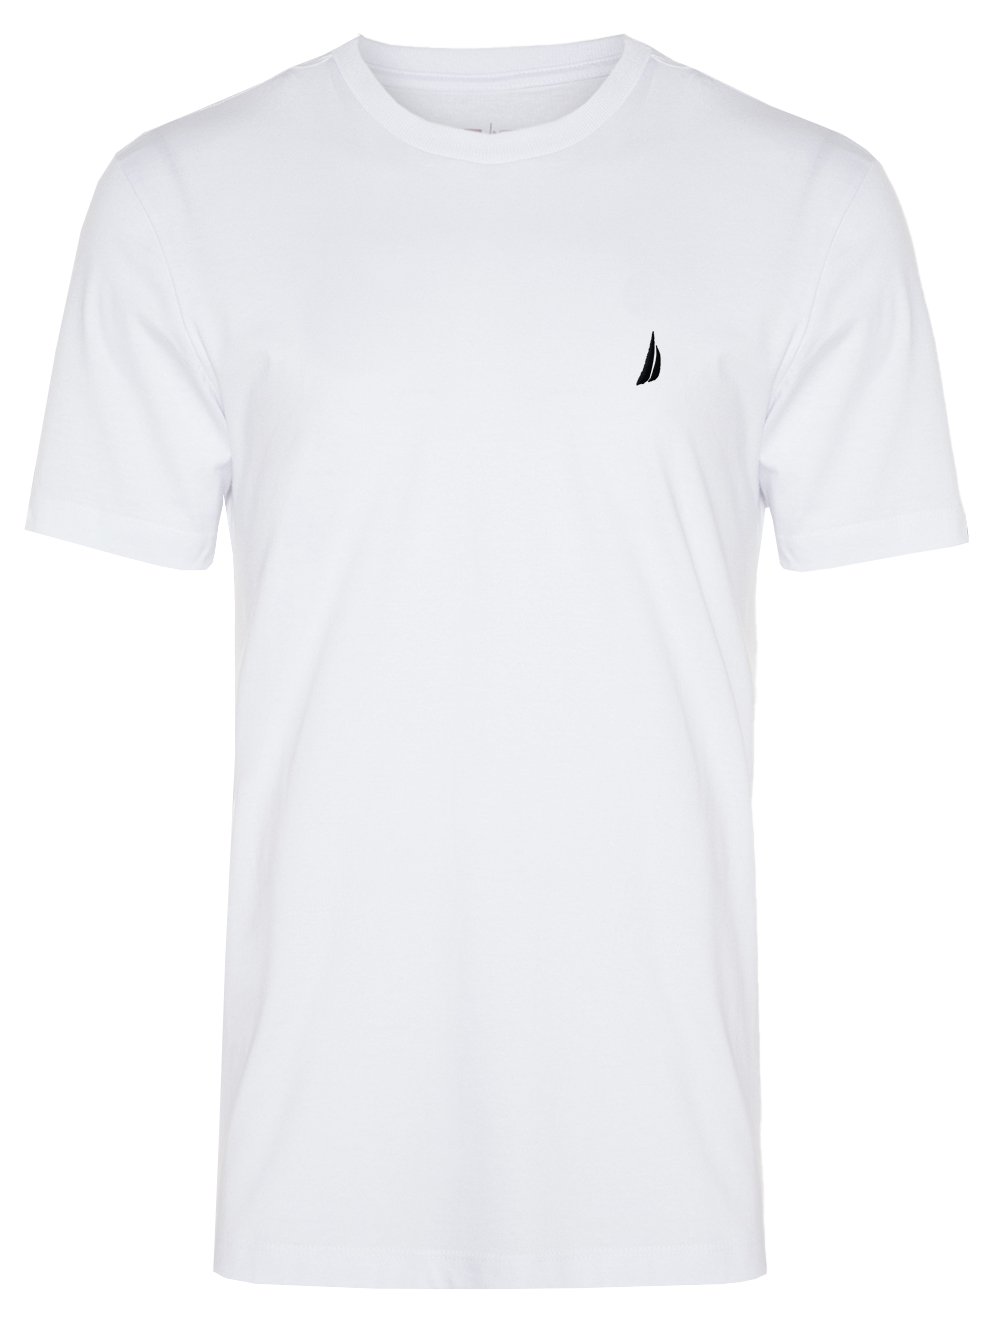 Camiseta Nautica Masculina Dark Icon Branca